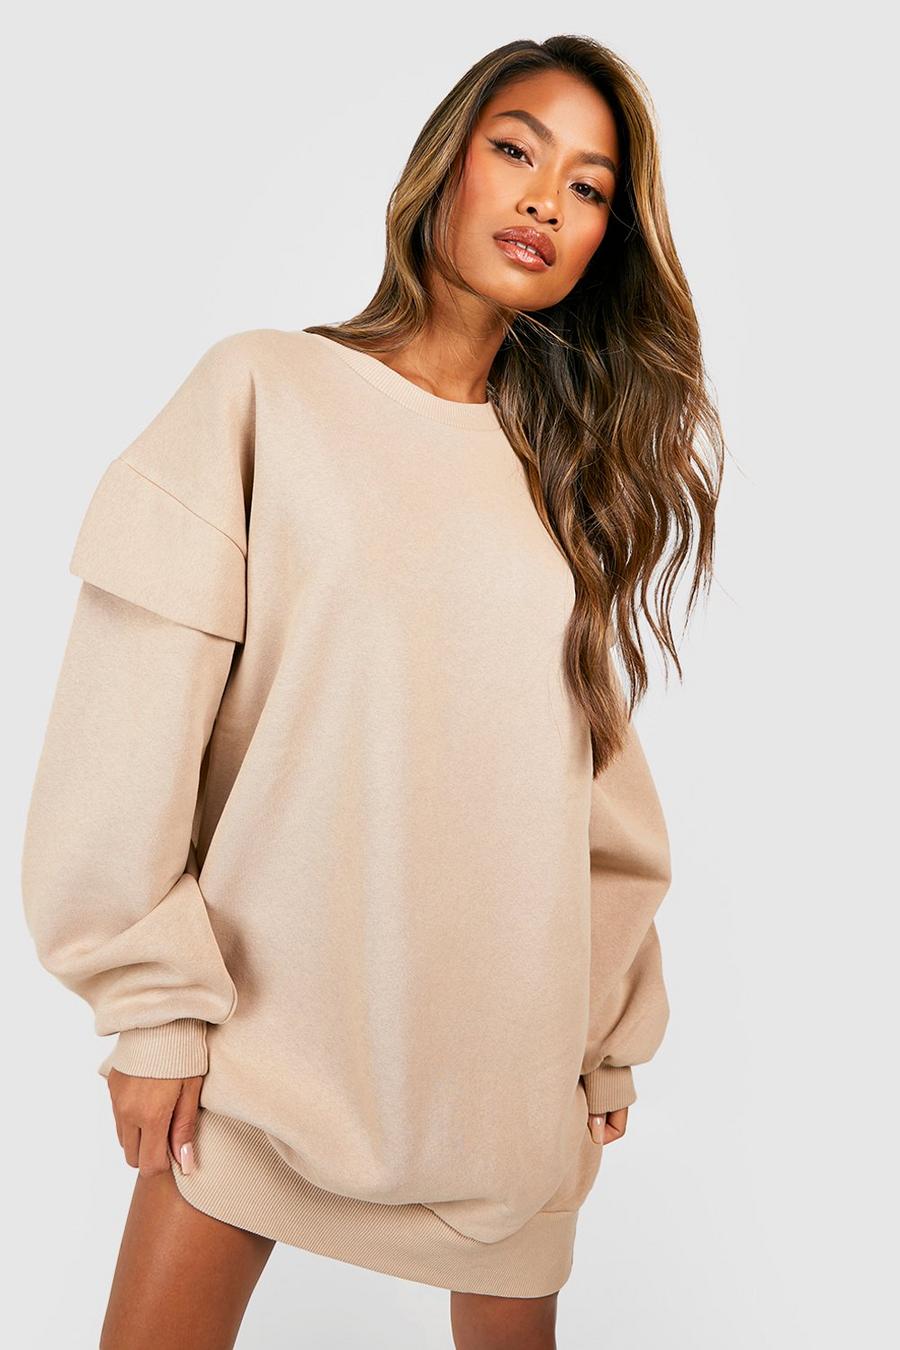 Camel beige Oversized Sweatshirt Dress